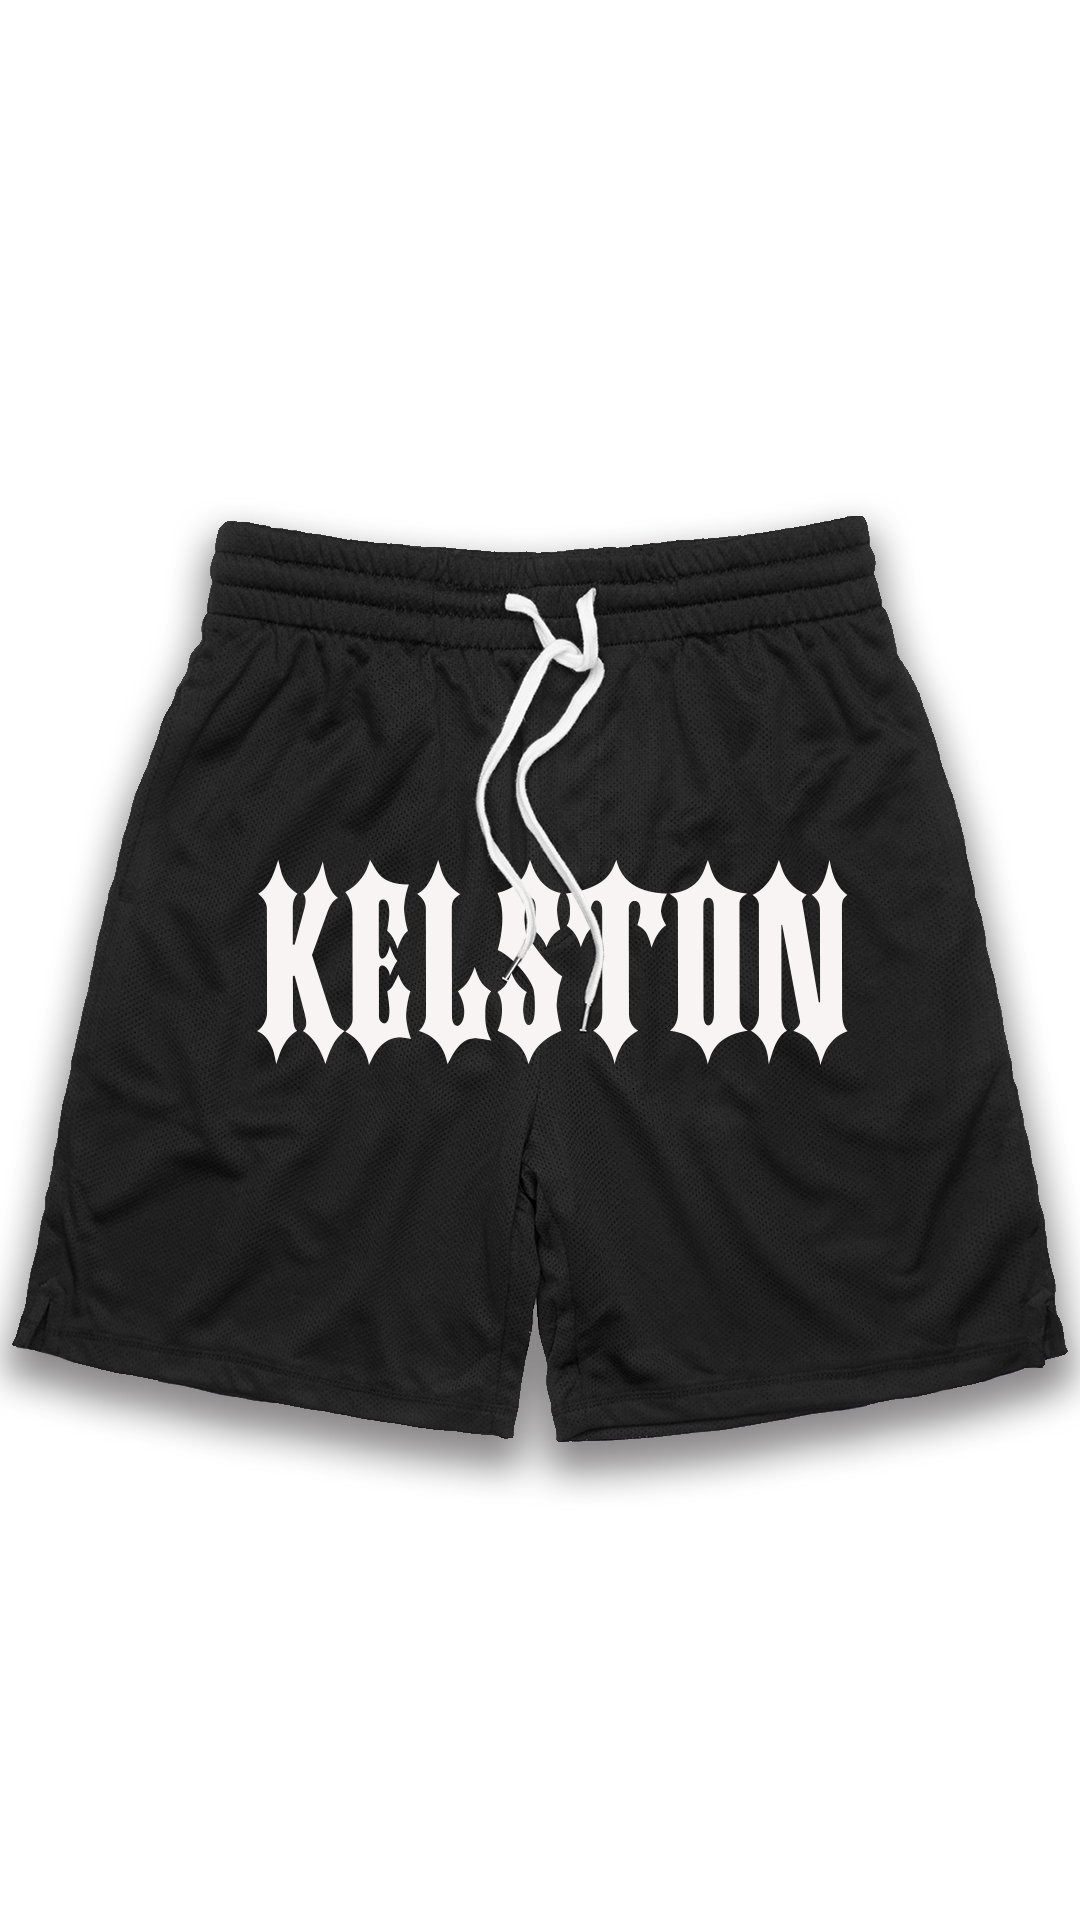 Classic Kelston Court Shorts